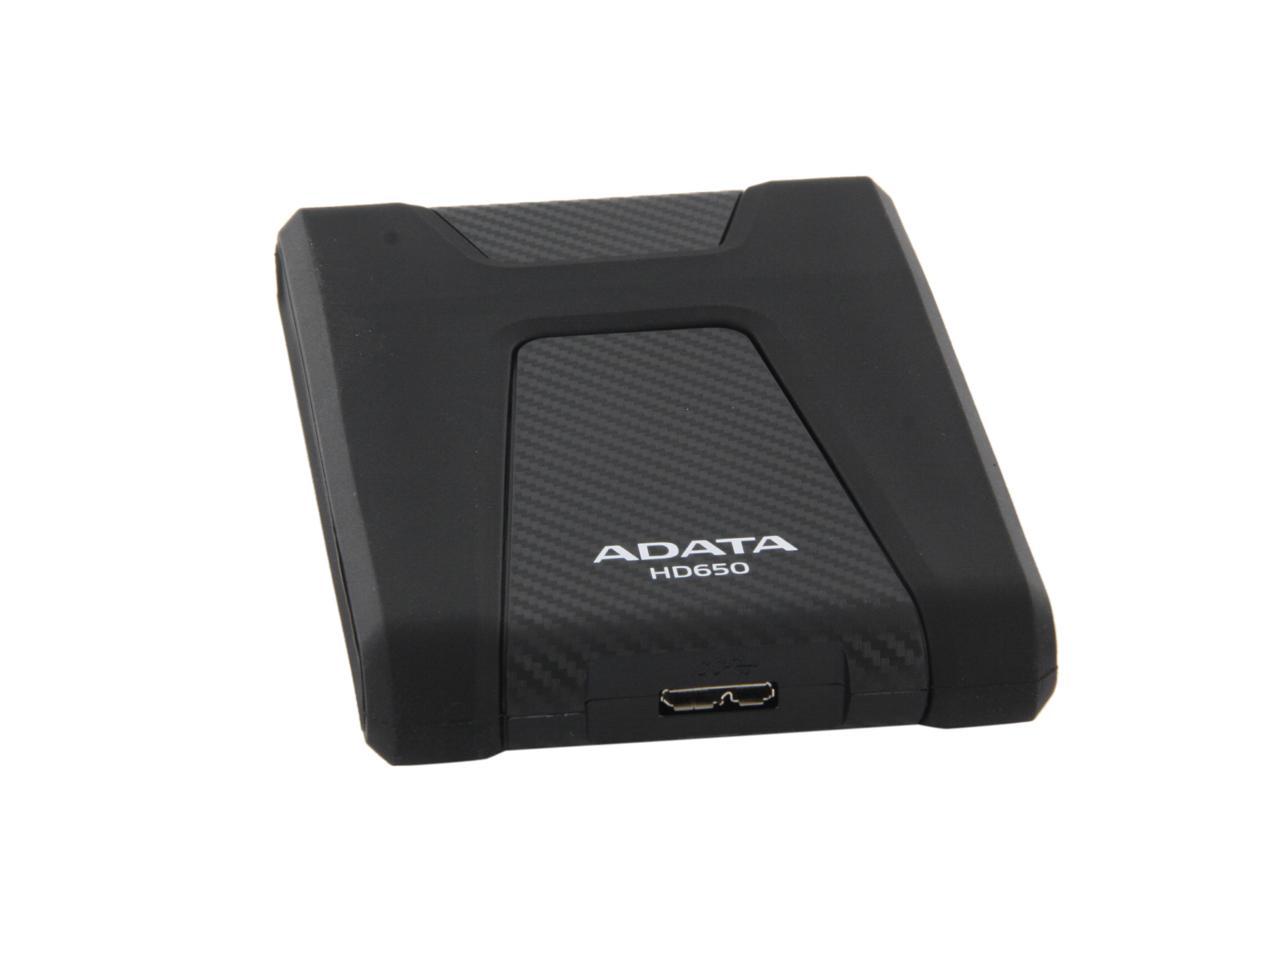 ADATA DashDrive Durable HD650 USB 3.0 1TB 2.5" External Hard Drive Black 